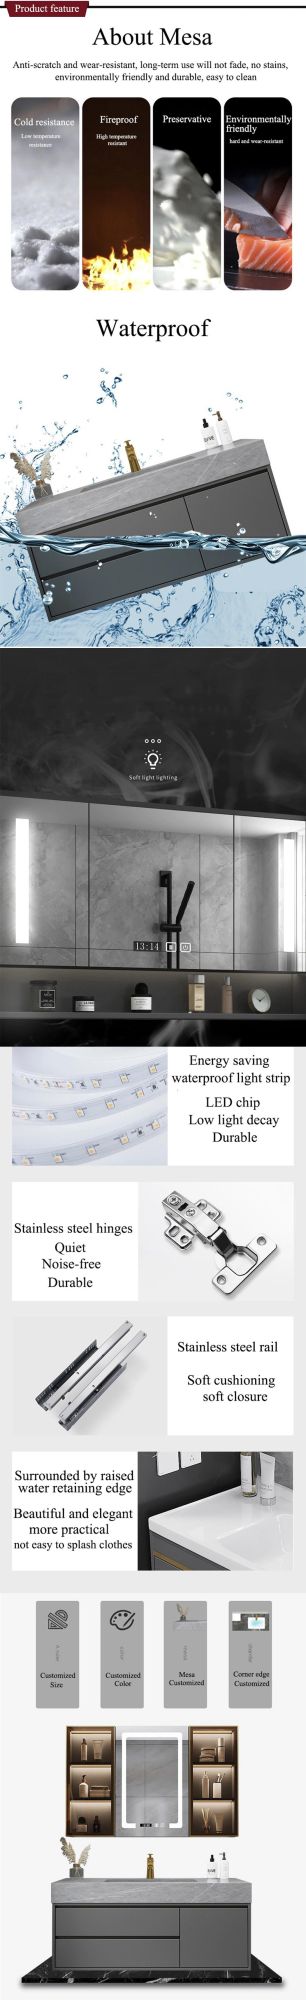 Modern Luxury Style Intelligent LED Light Mirror Ceramic Sink Bathroom Vanity